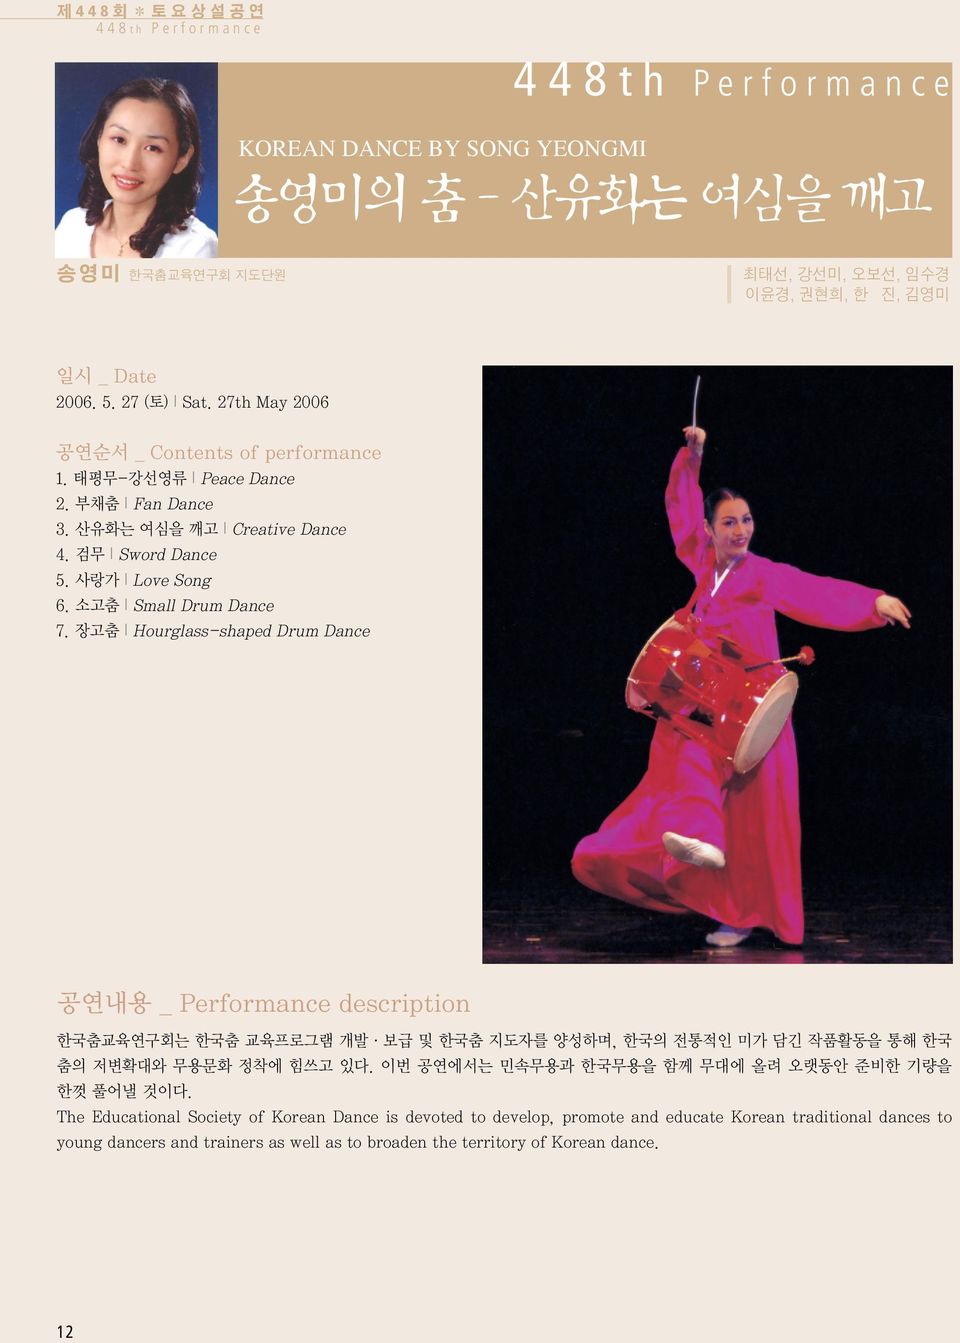 KOREAN DANCE BY SONG